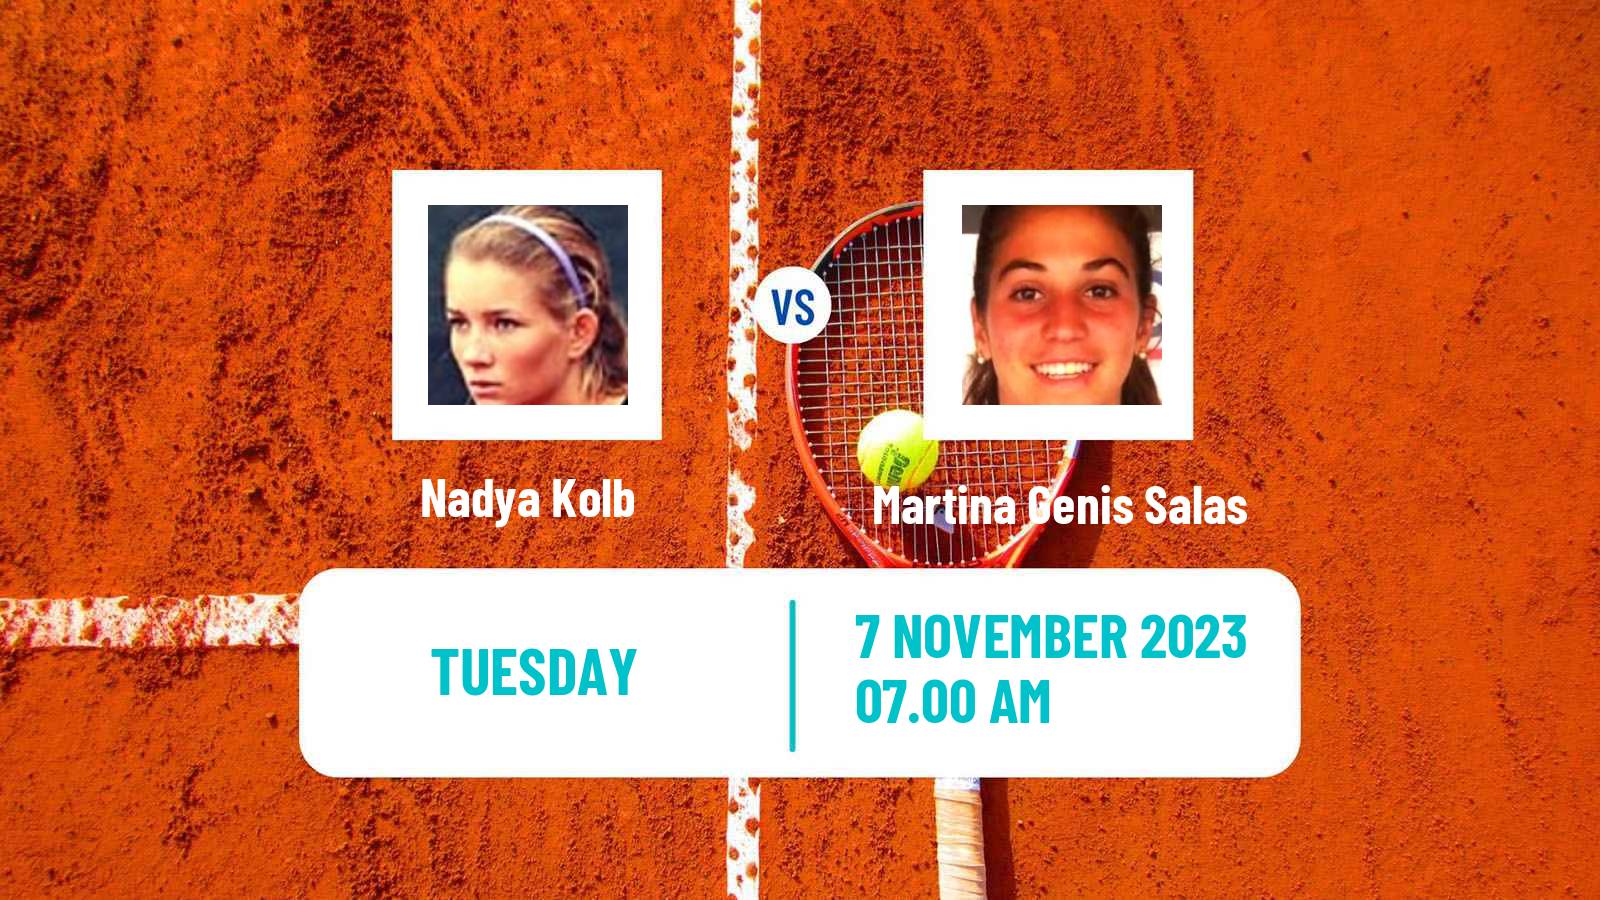 Tennis ITF W15 Castellon Women Nadya Kolb - Martina Genis Salas